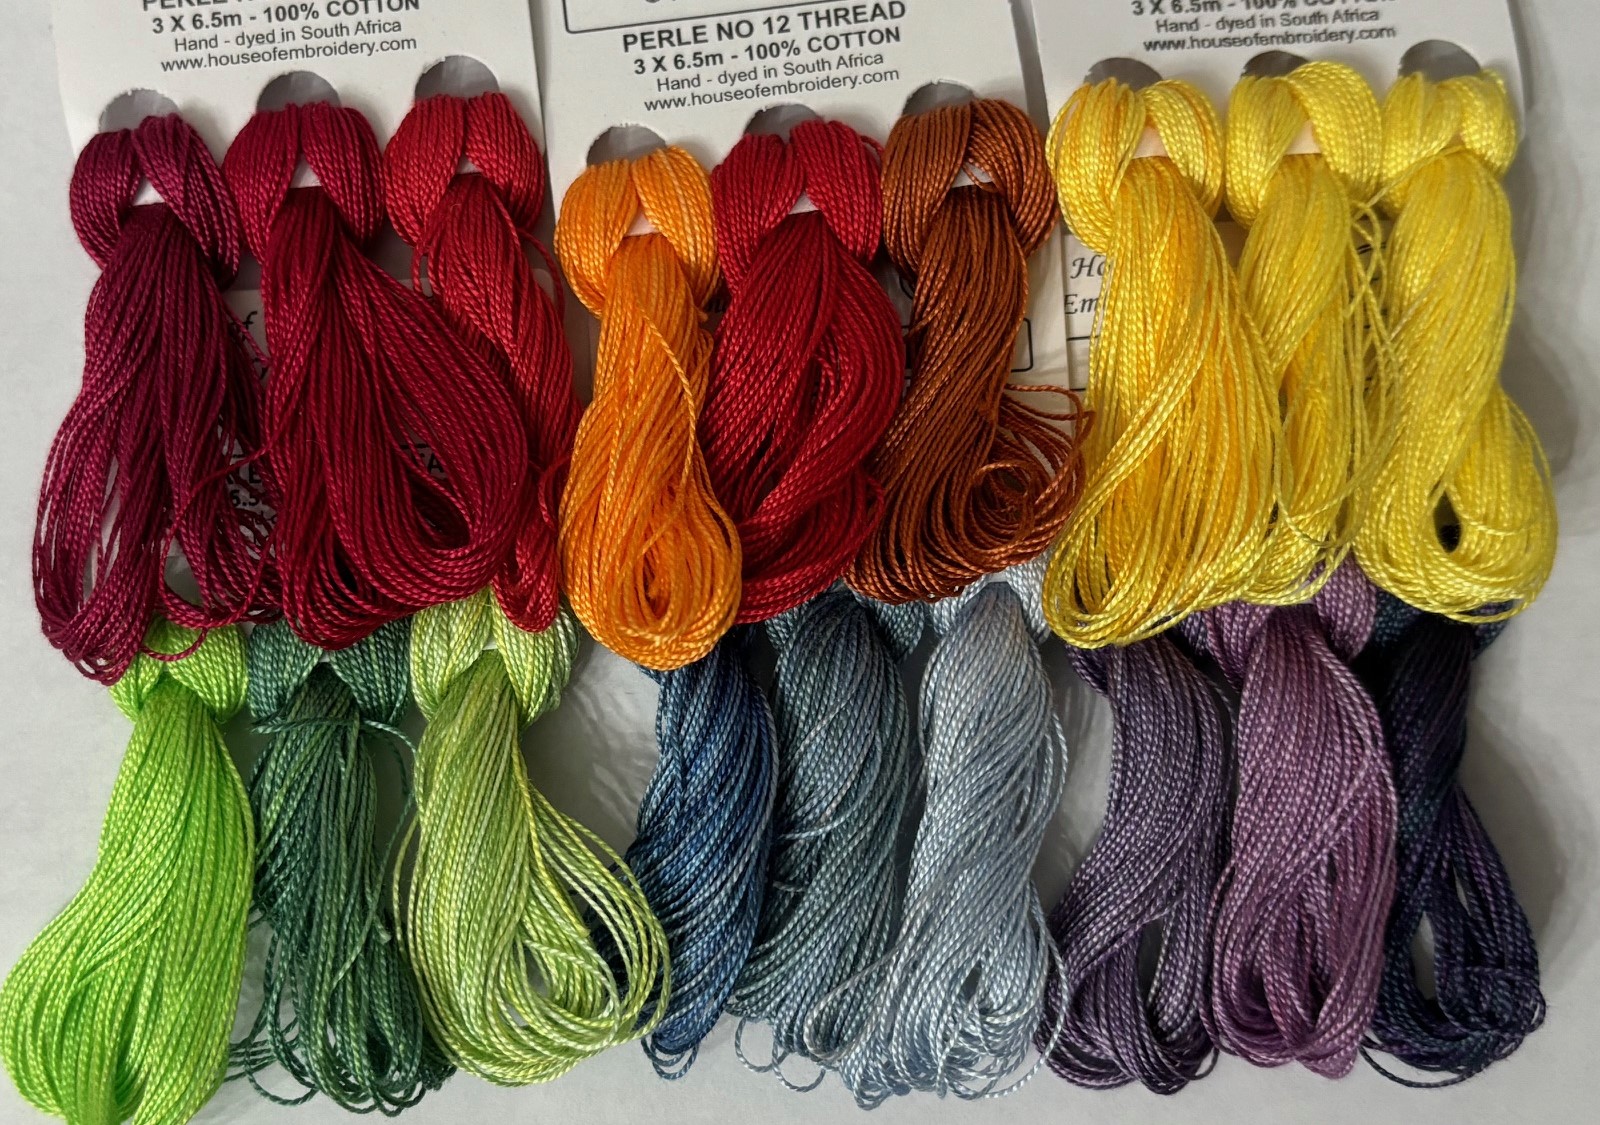 Perle 12 Cotton - Rainbow Taster Pack